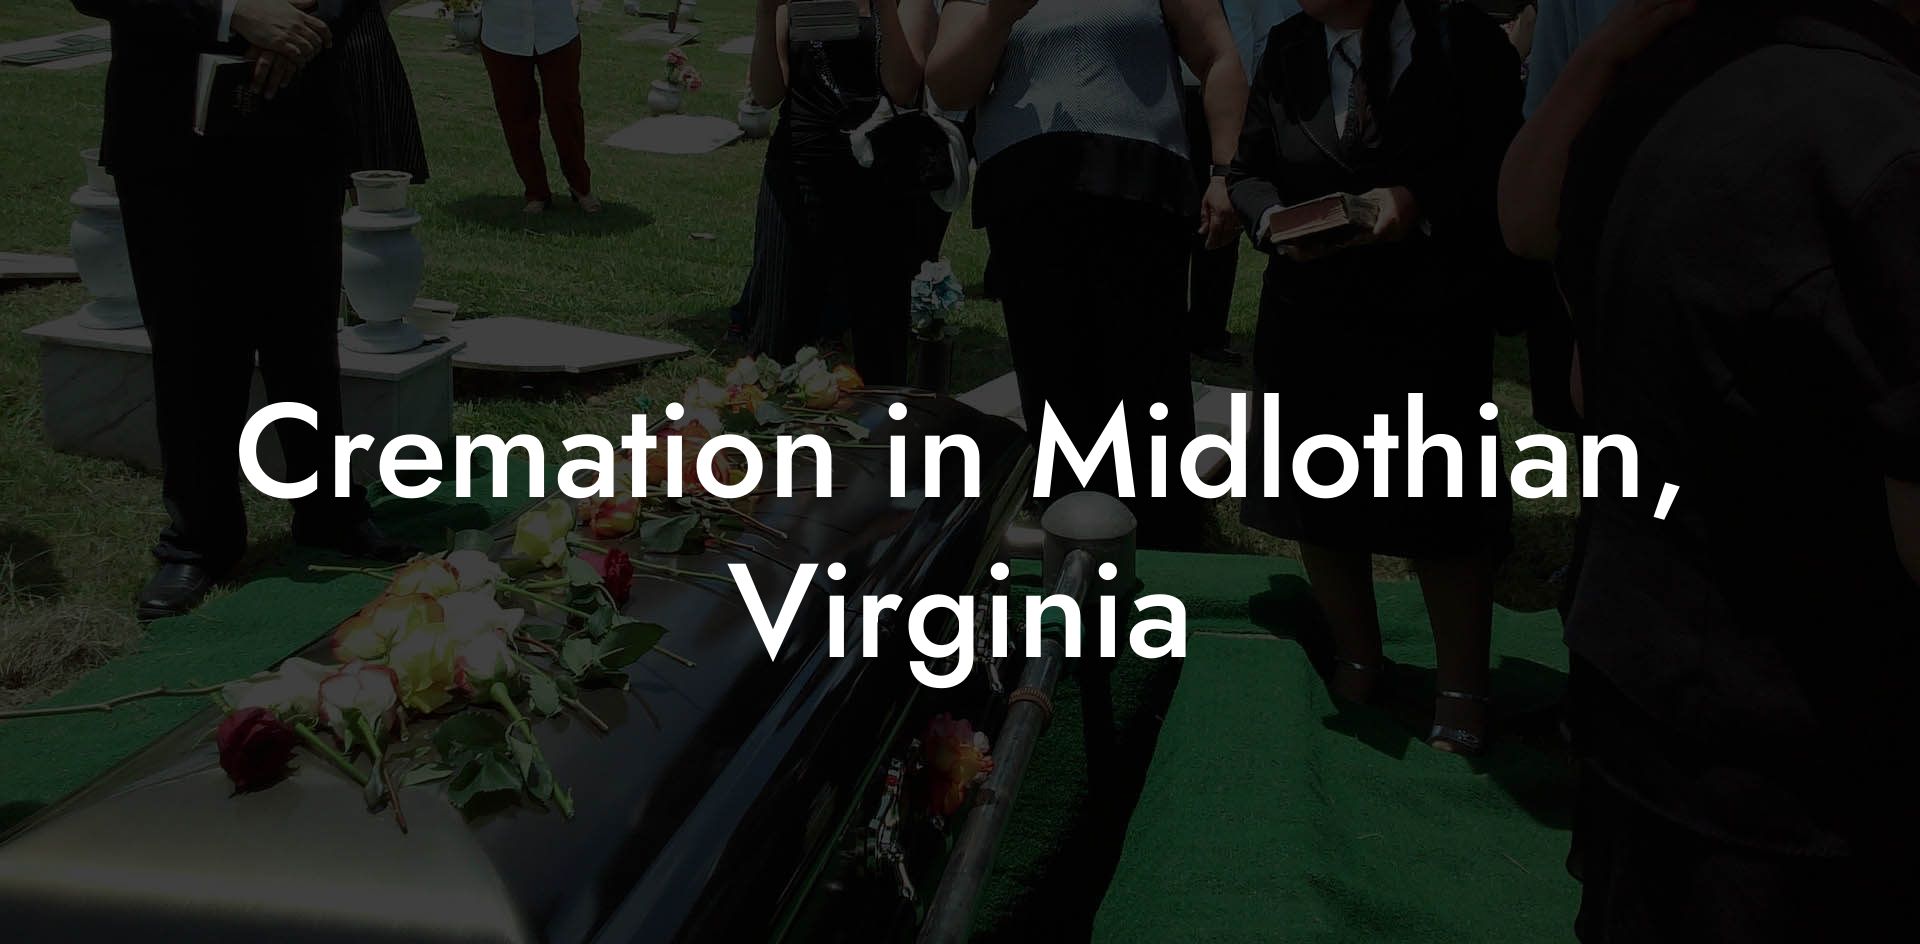 Cremation in Midlothian, Virginia